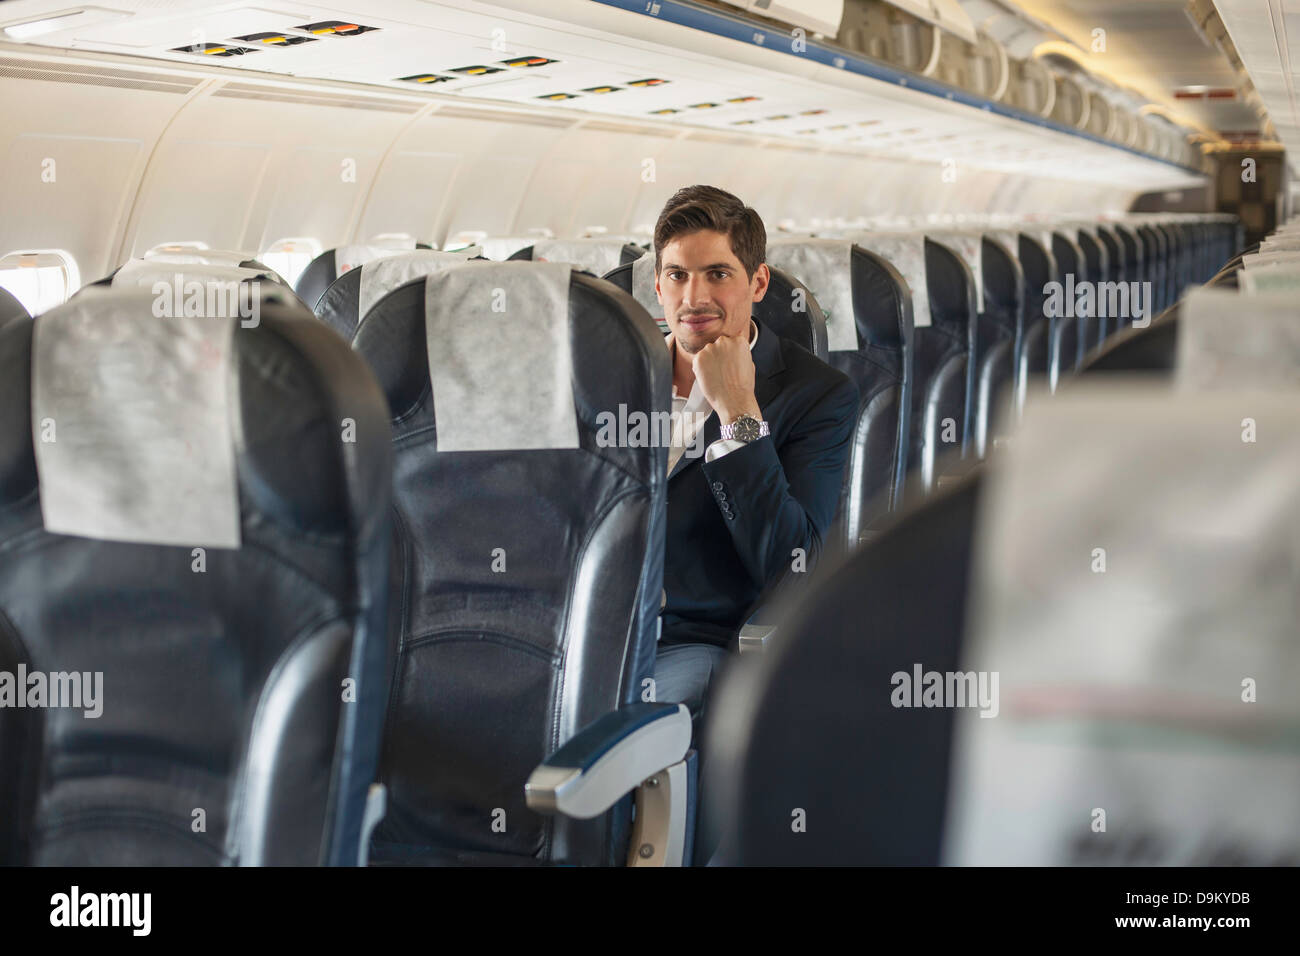 Male passenger sitting on aeroplane Stock Photo